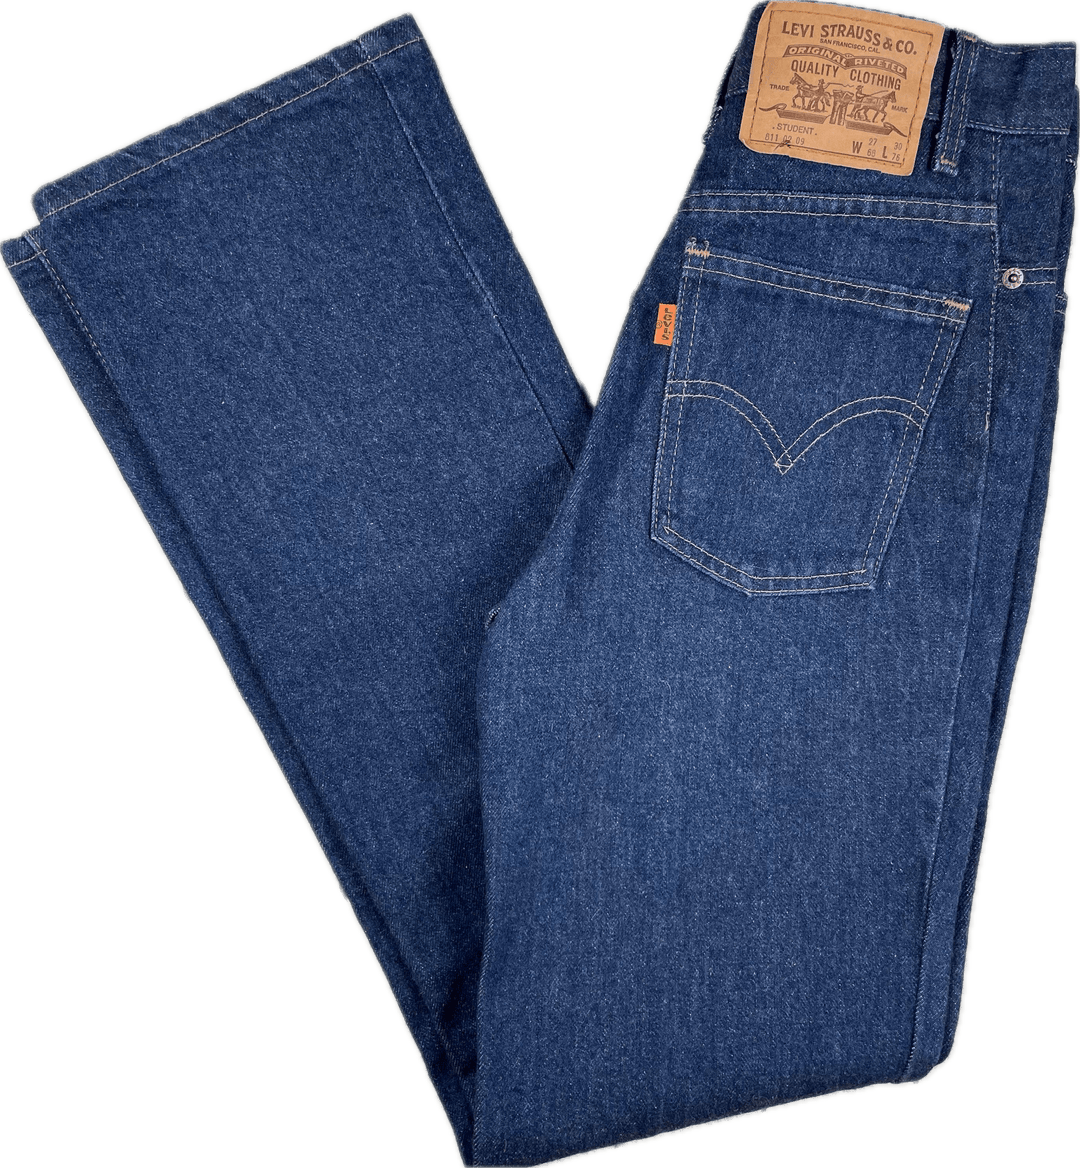 Vintage Levis 811 Orange Tab Australian Made 80's Jeans - Size 27 - Jean Pool